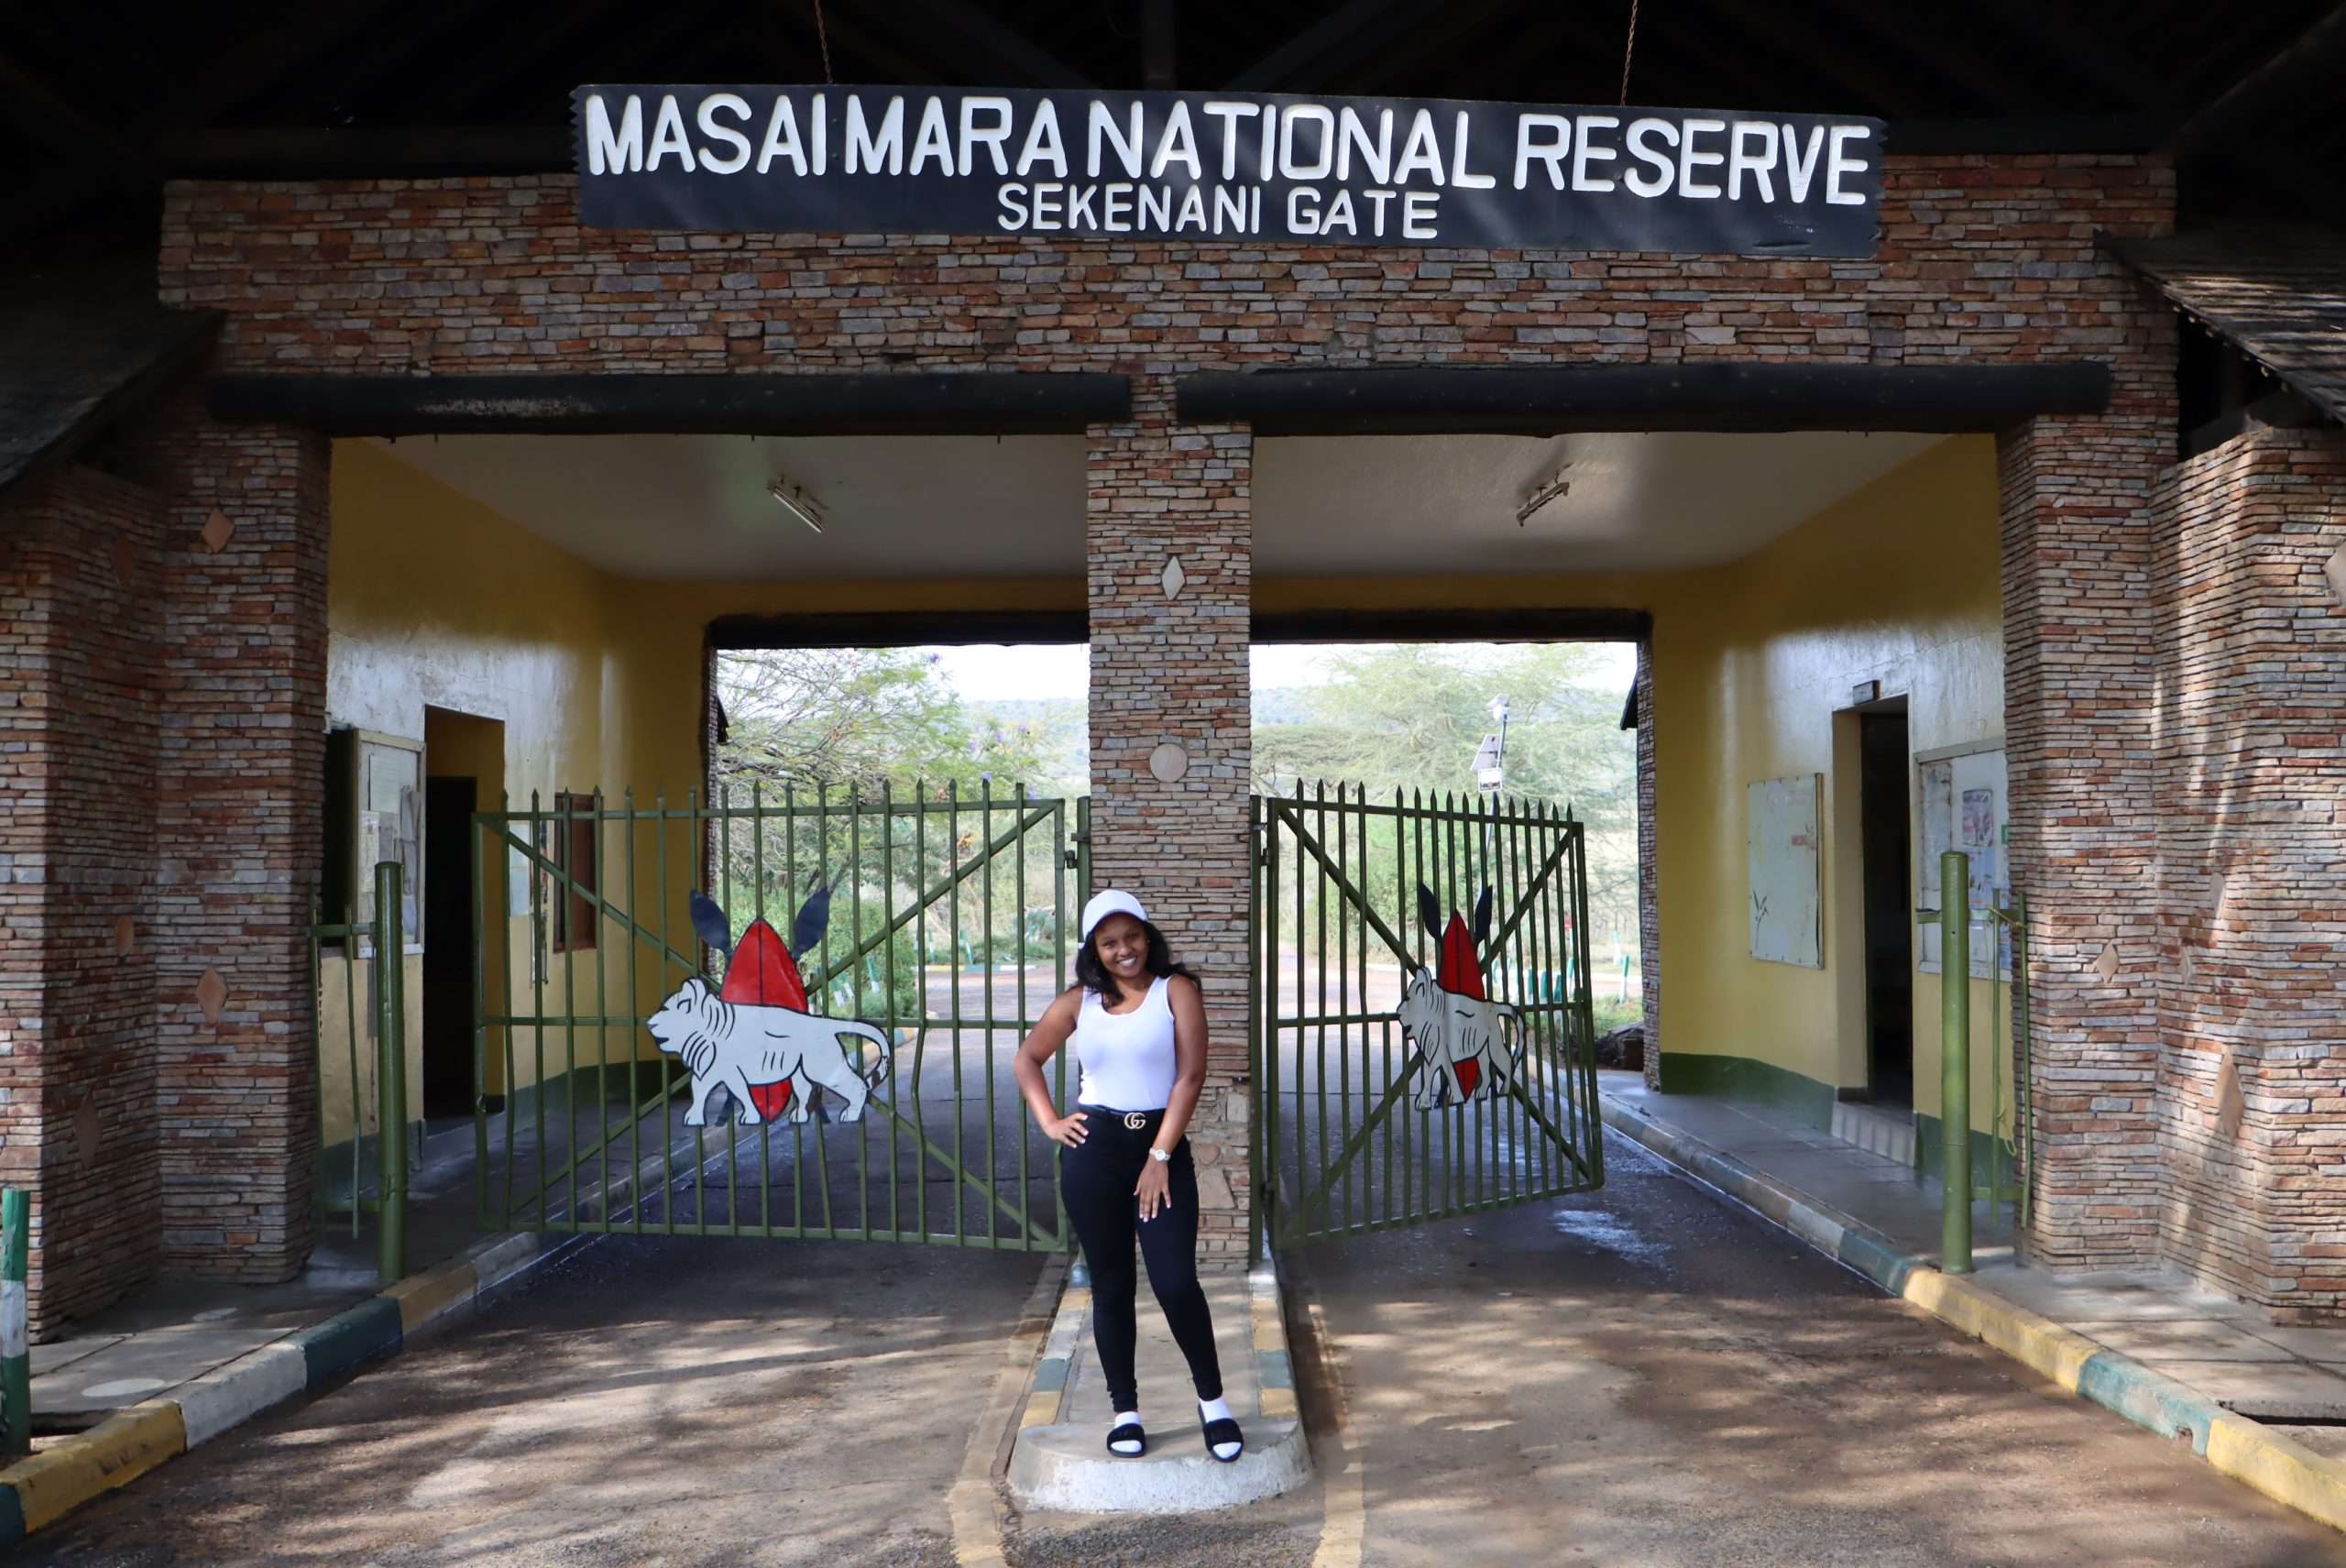 Maasai Mara National Reserve - Masai Mara Gate